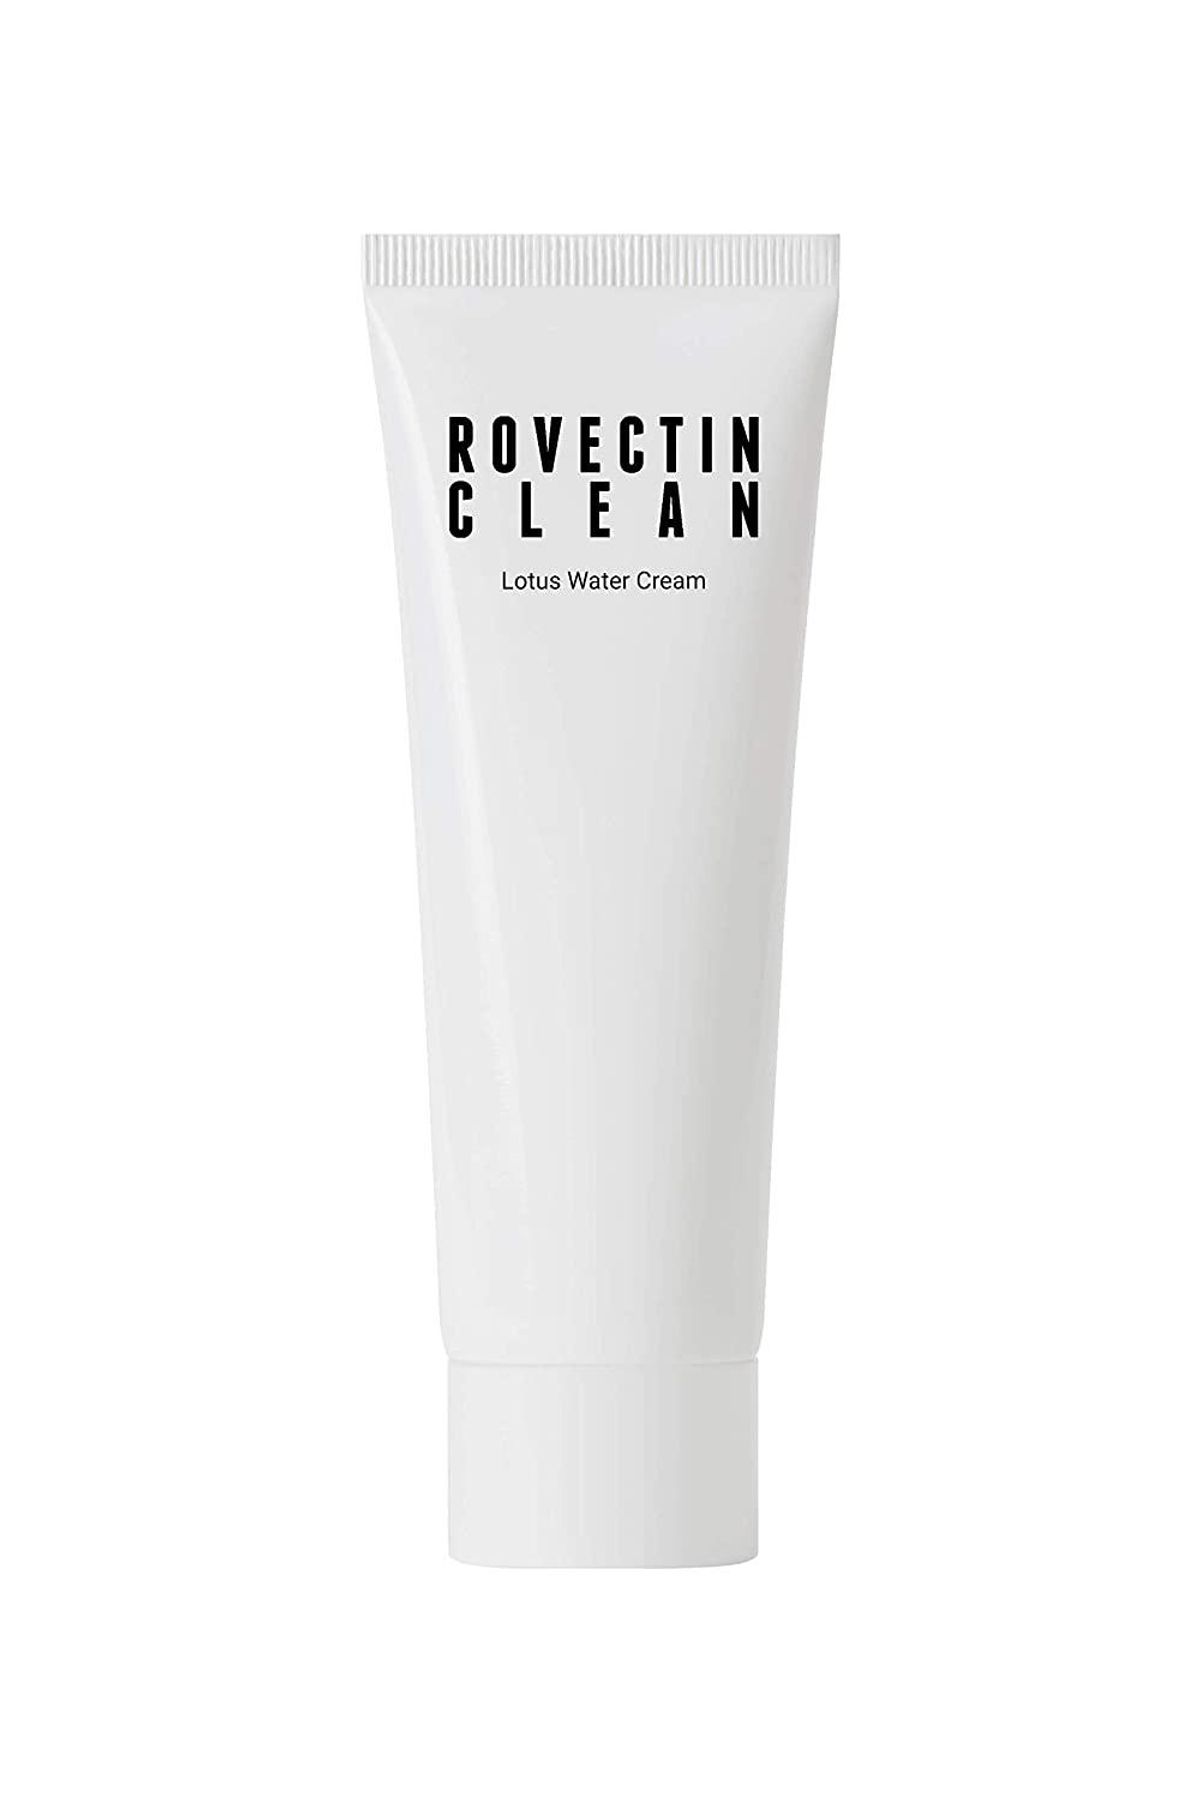 rovectin clean lotus water cream